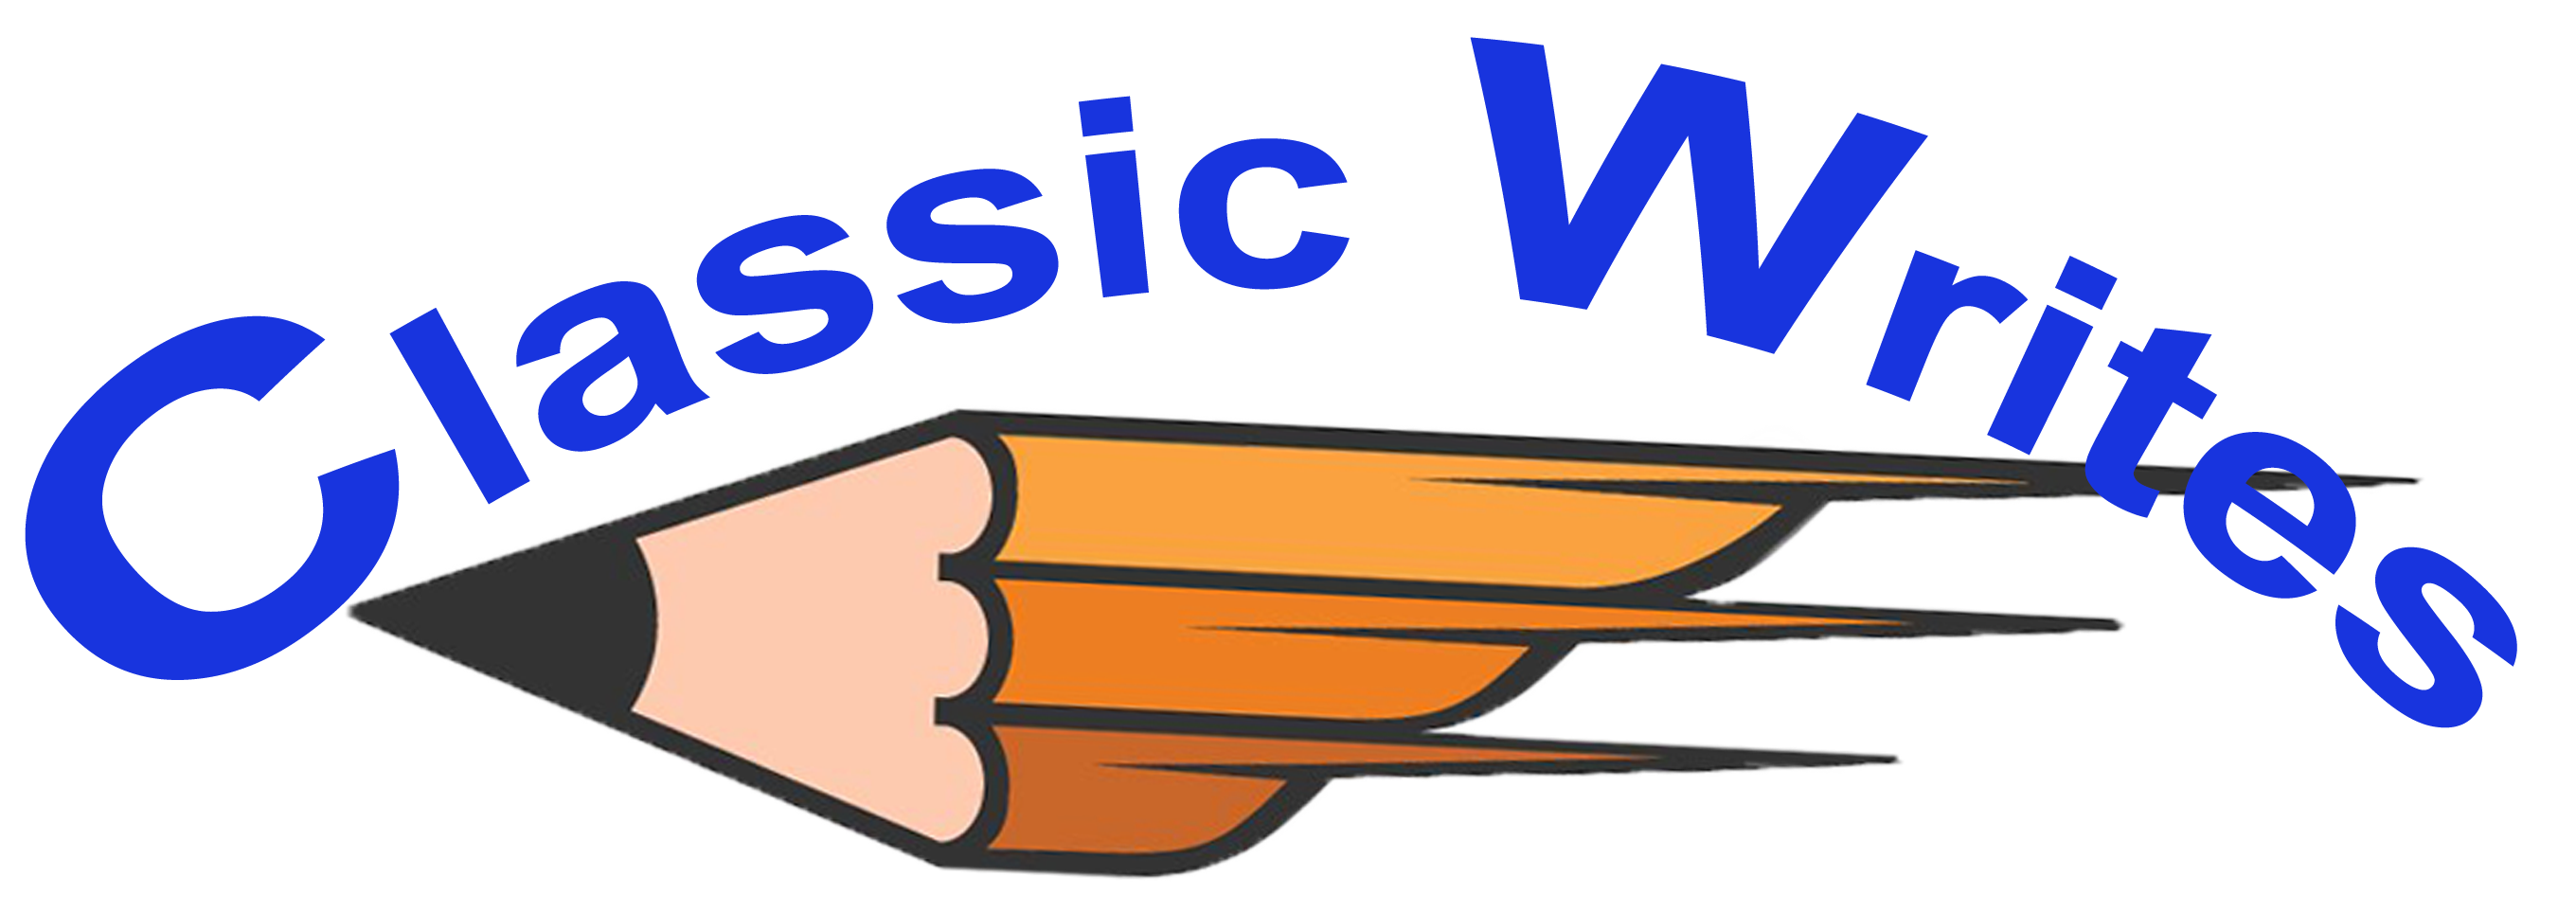 Classic writes logo